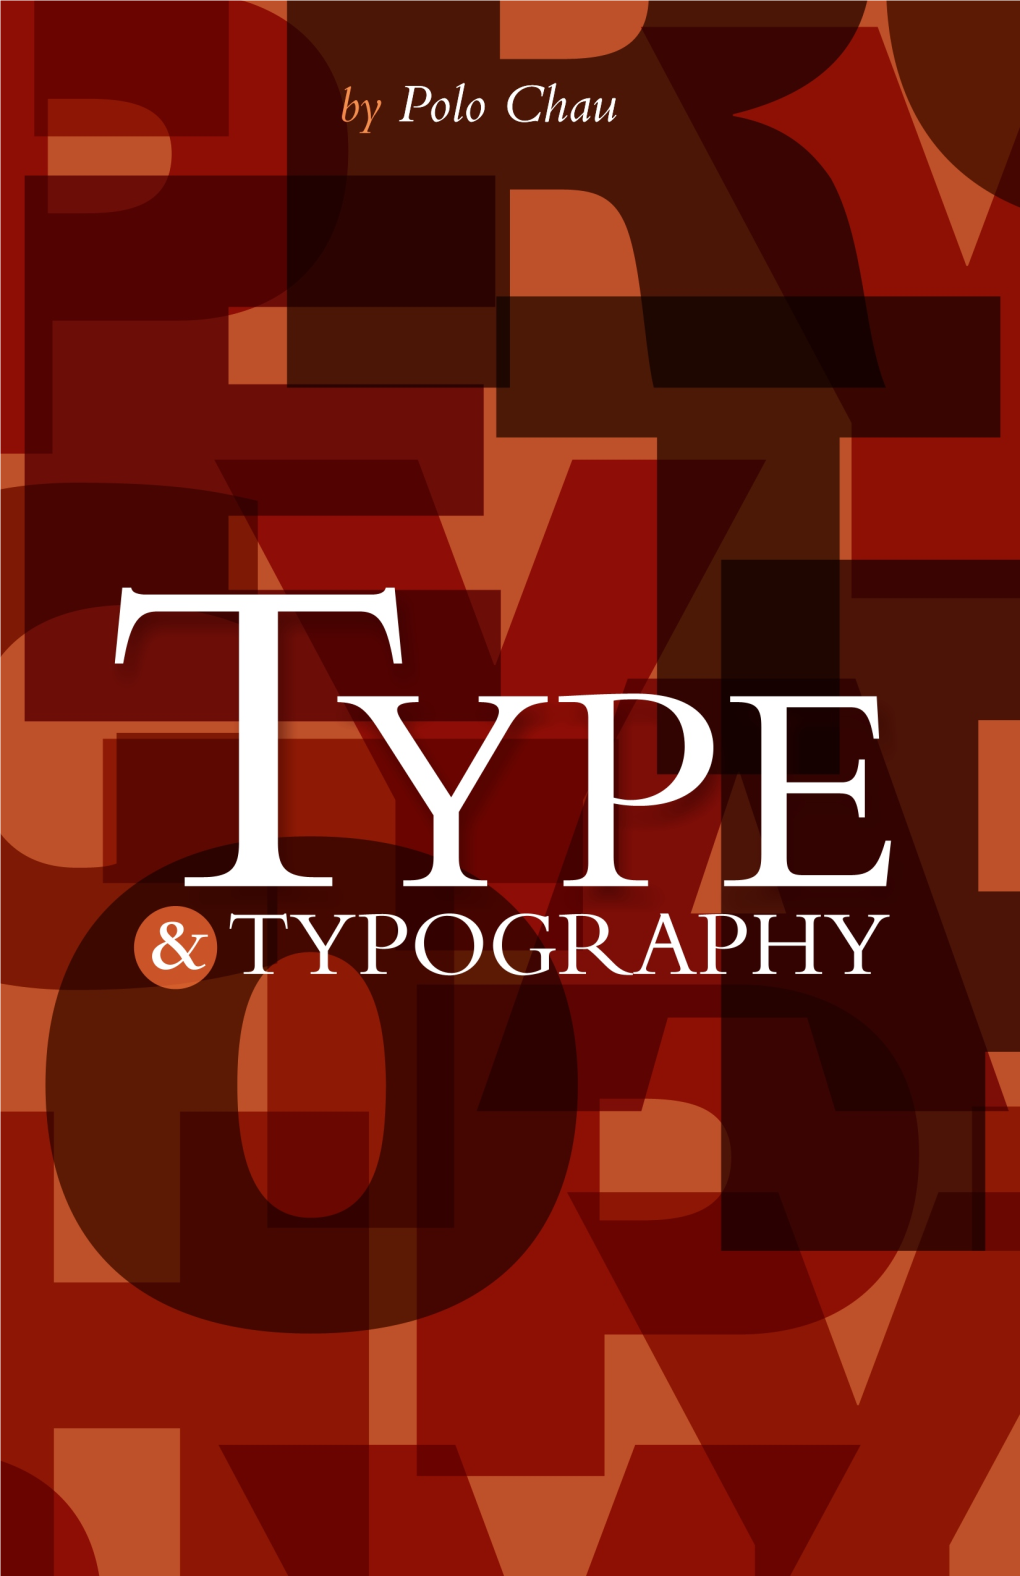 The Elements of Typographic Styles